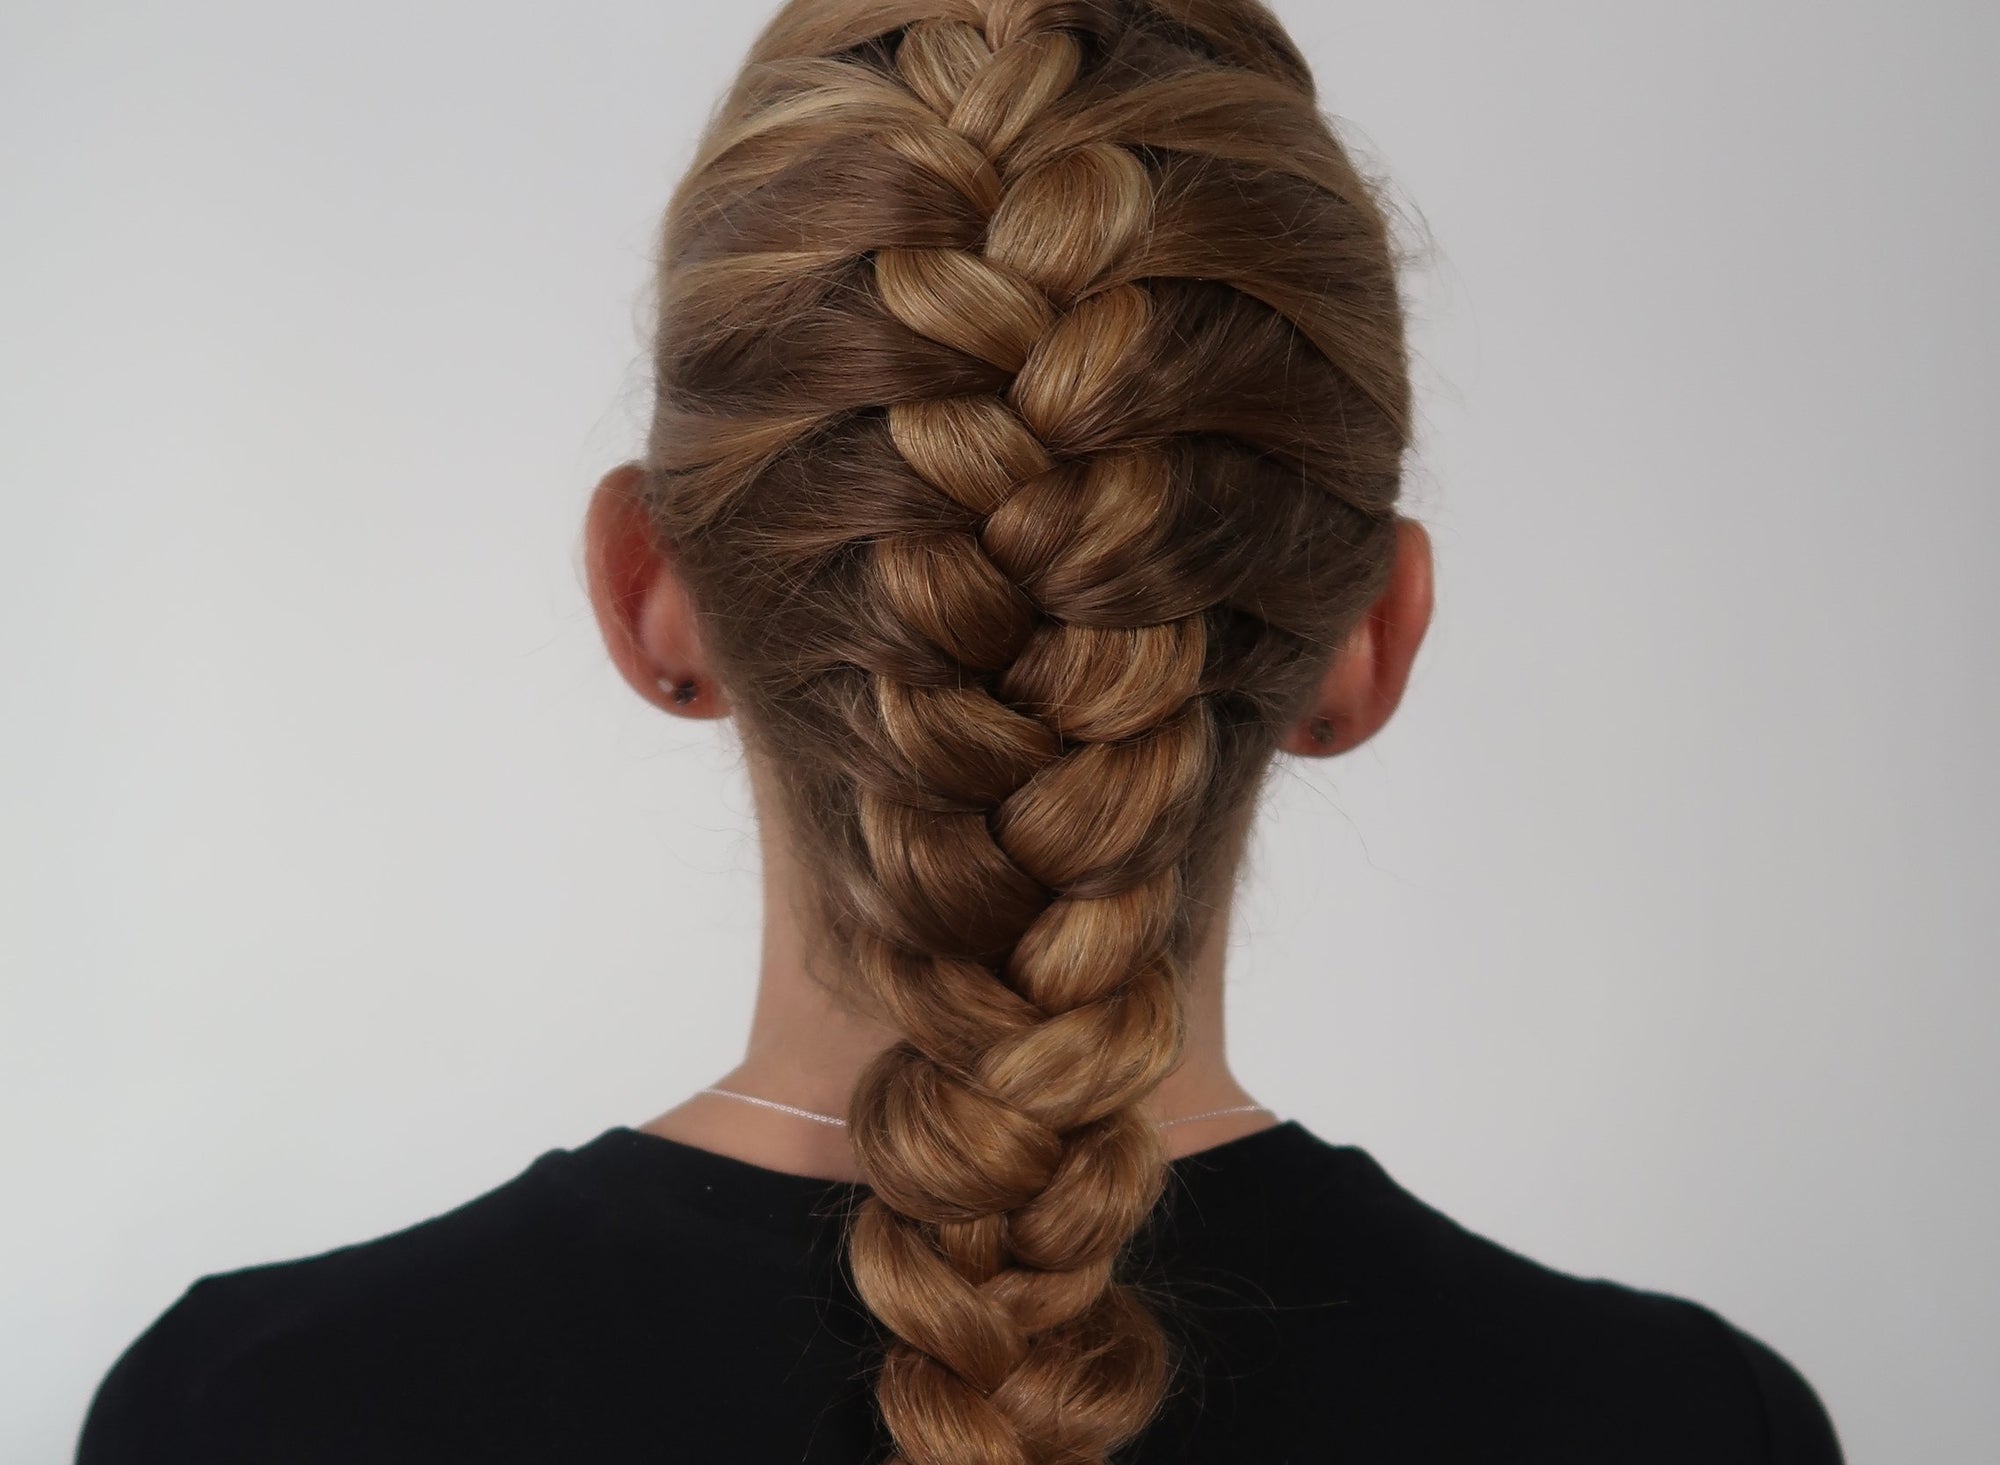 Davines how to braid your own hair tutorial DIY